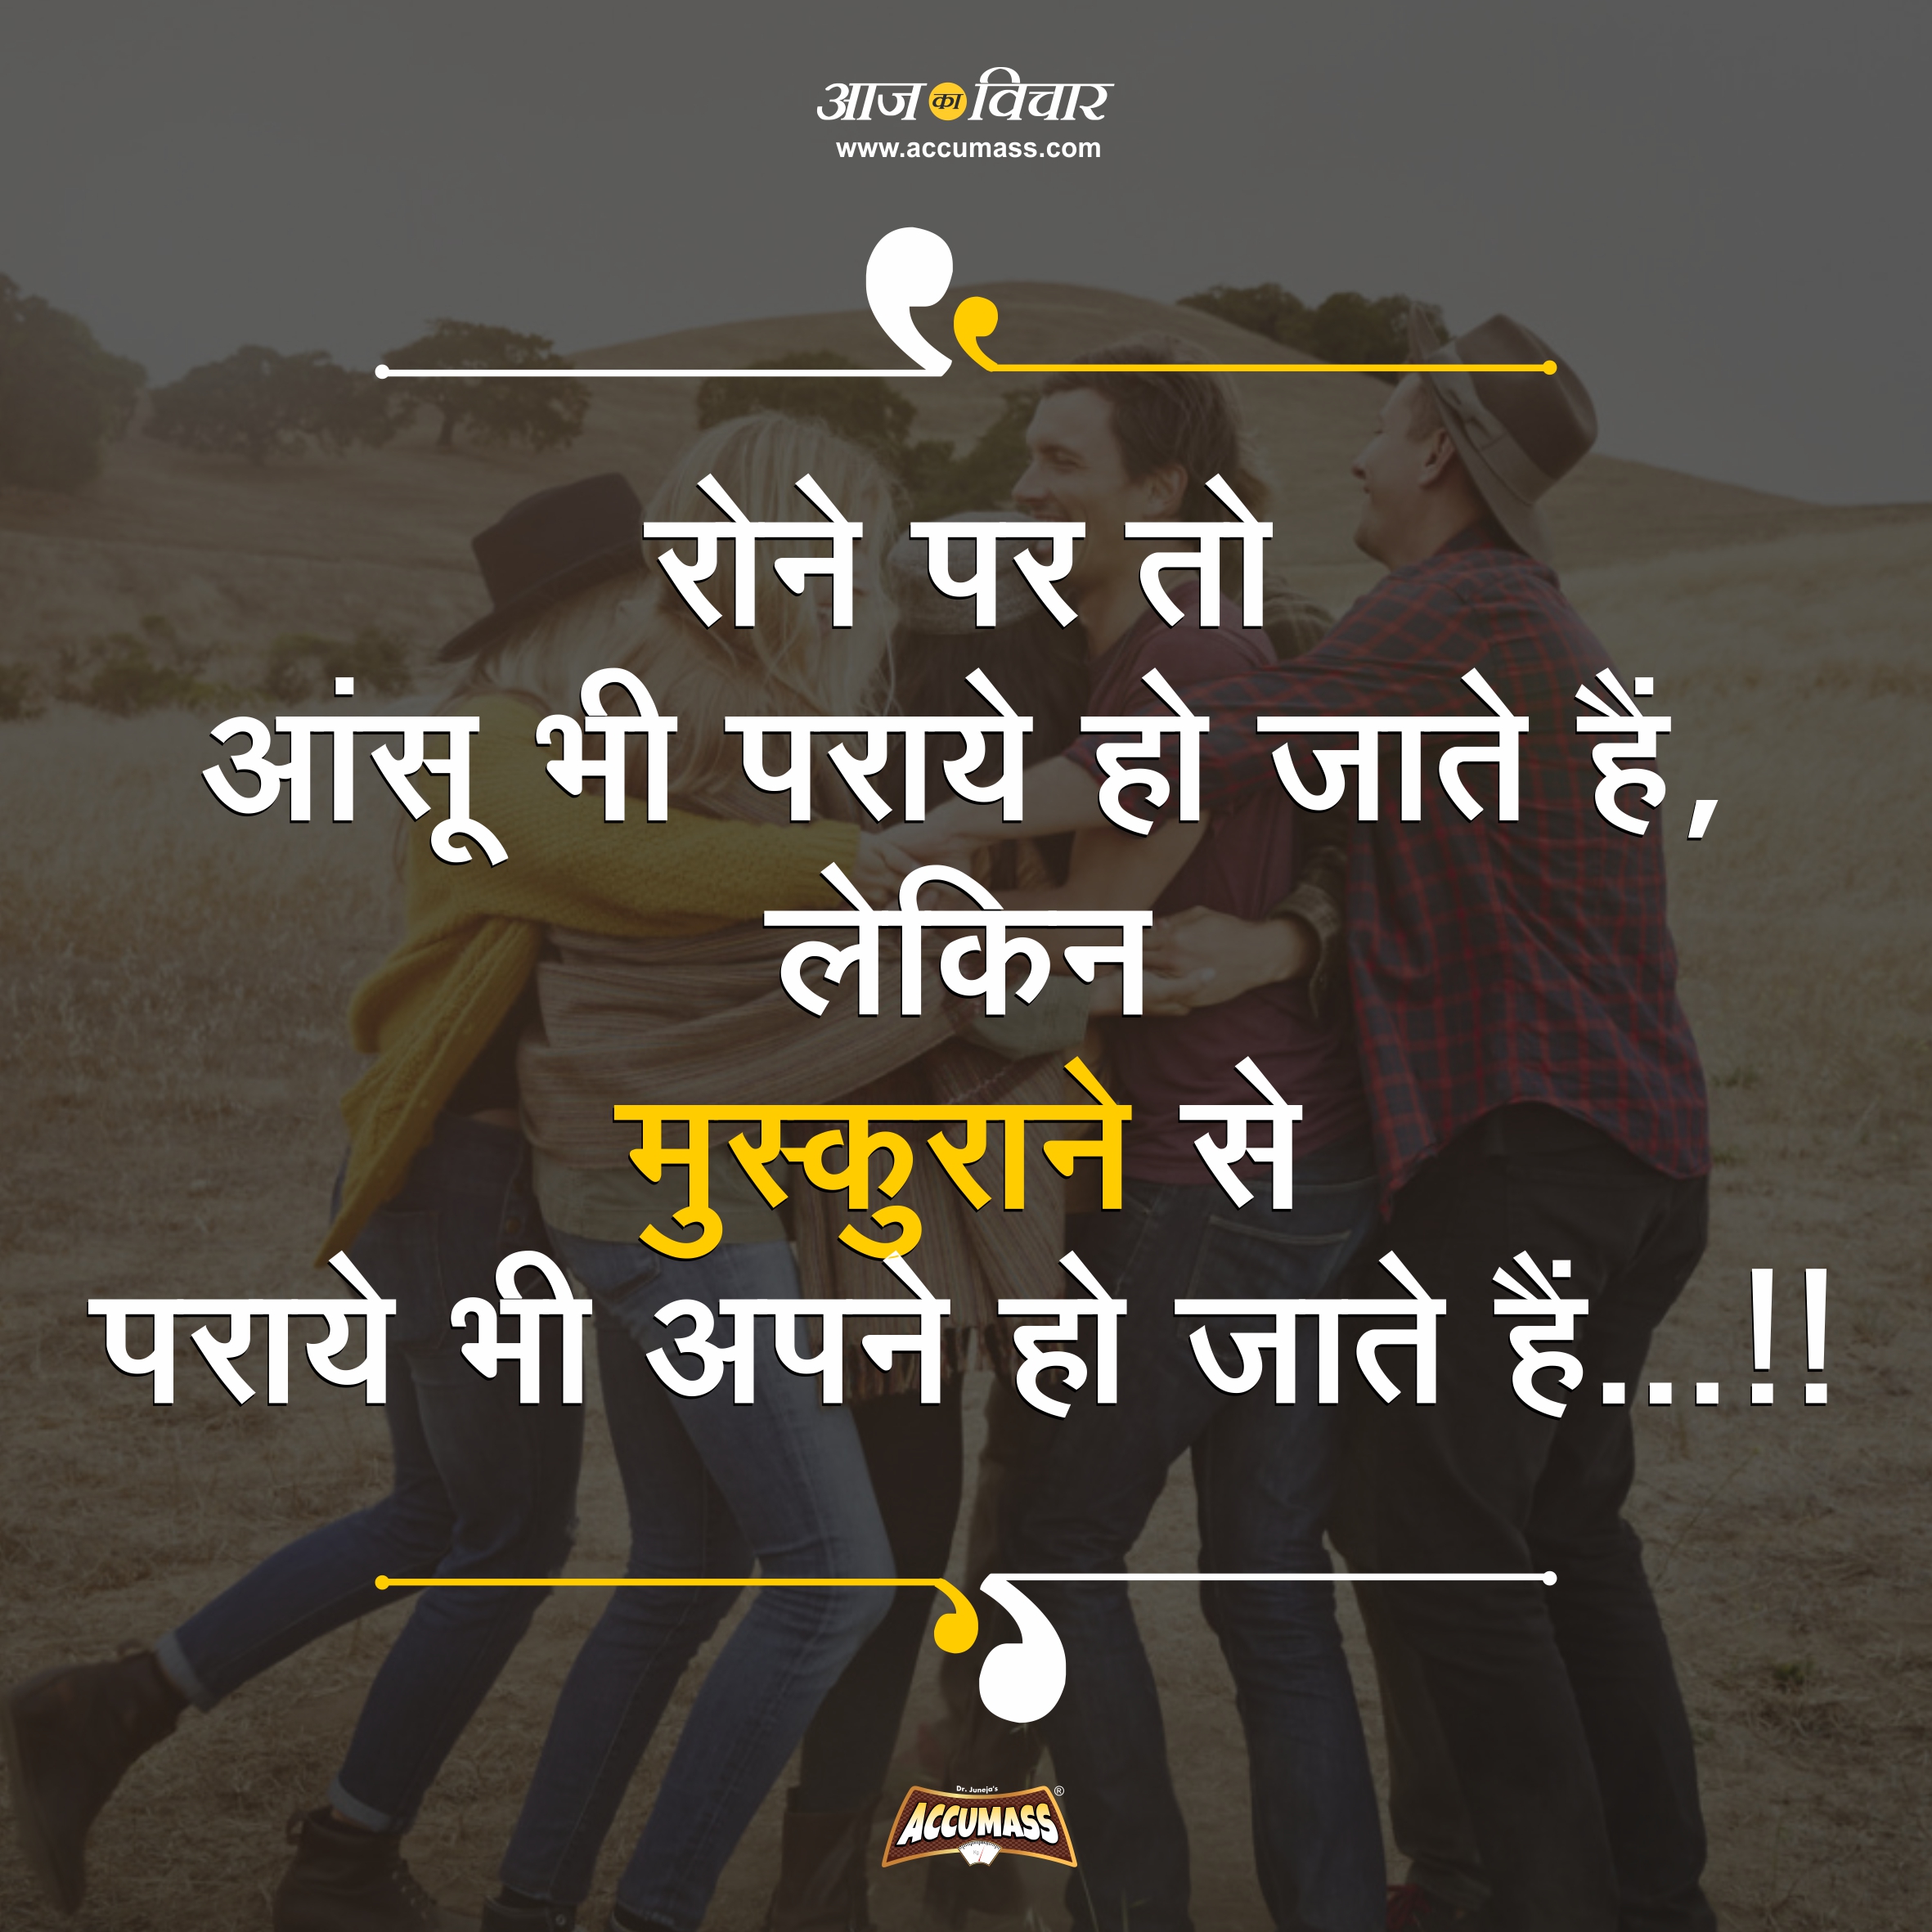 Hindi Motivational